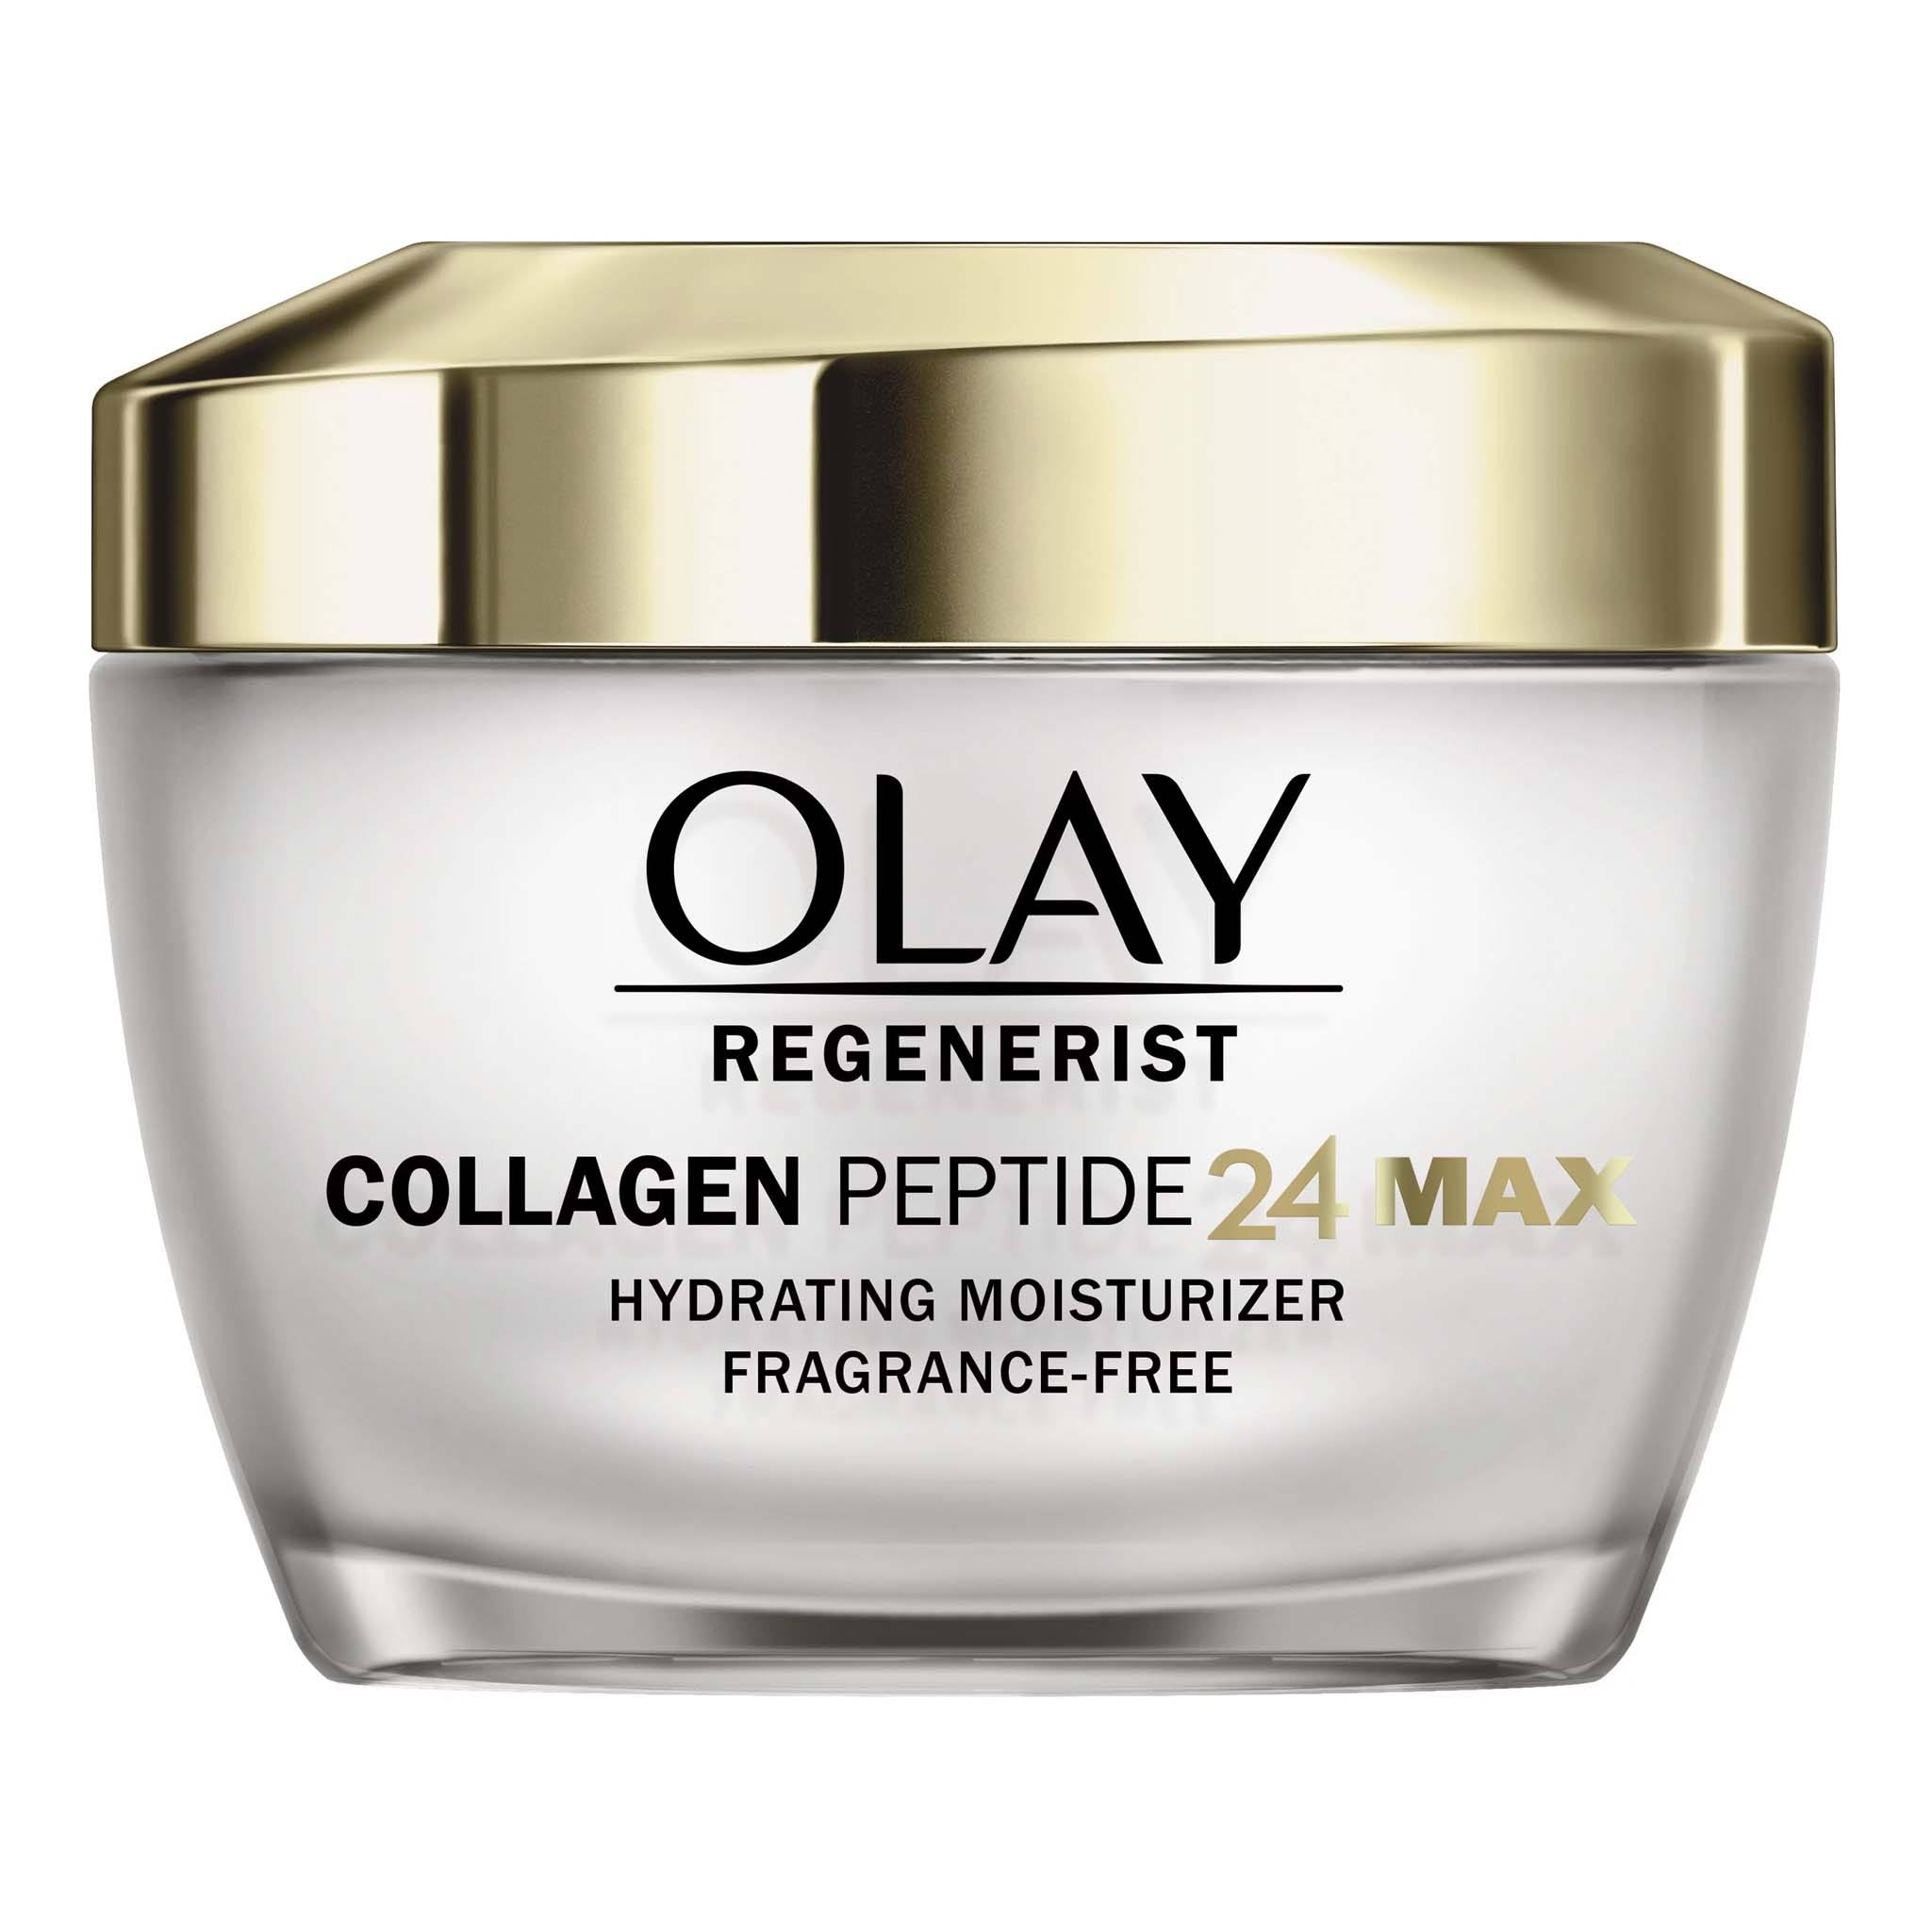 Olay Regenerist Collagen Peptide 24 Max Face Moisturizer, Fragrance Free, 1.7 oz